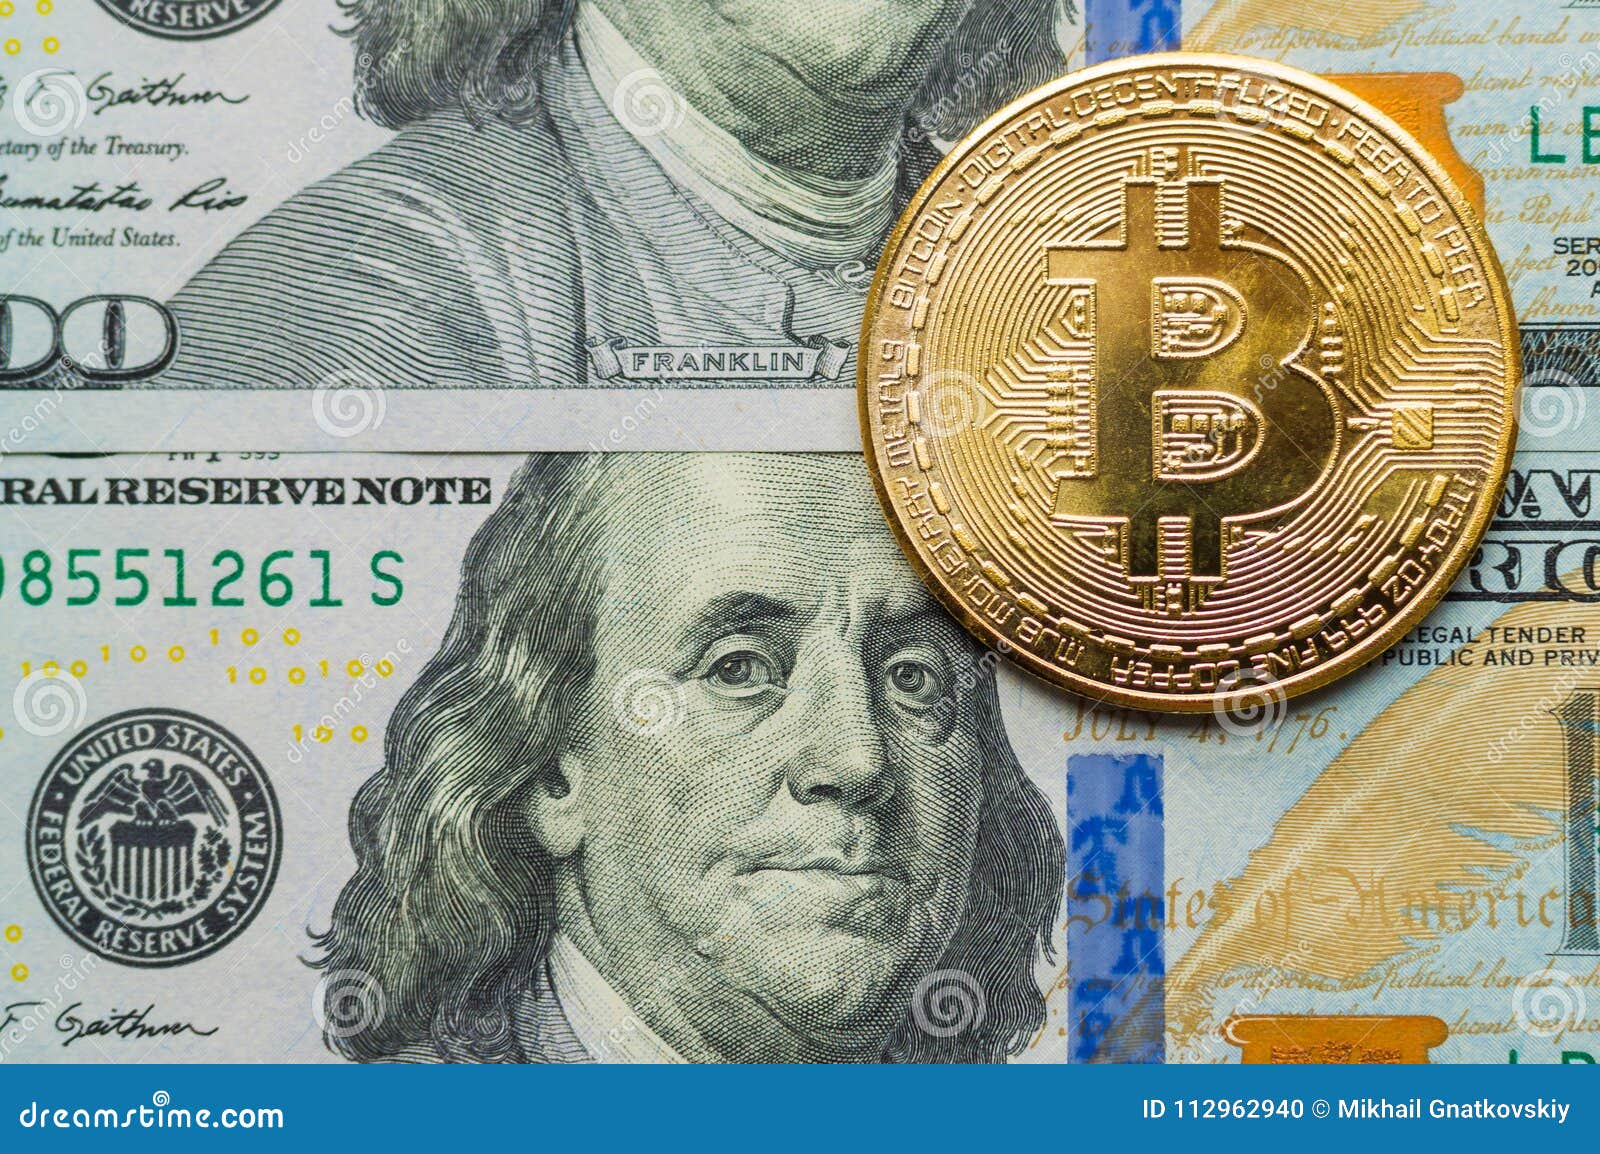 bitcoin value us dollar